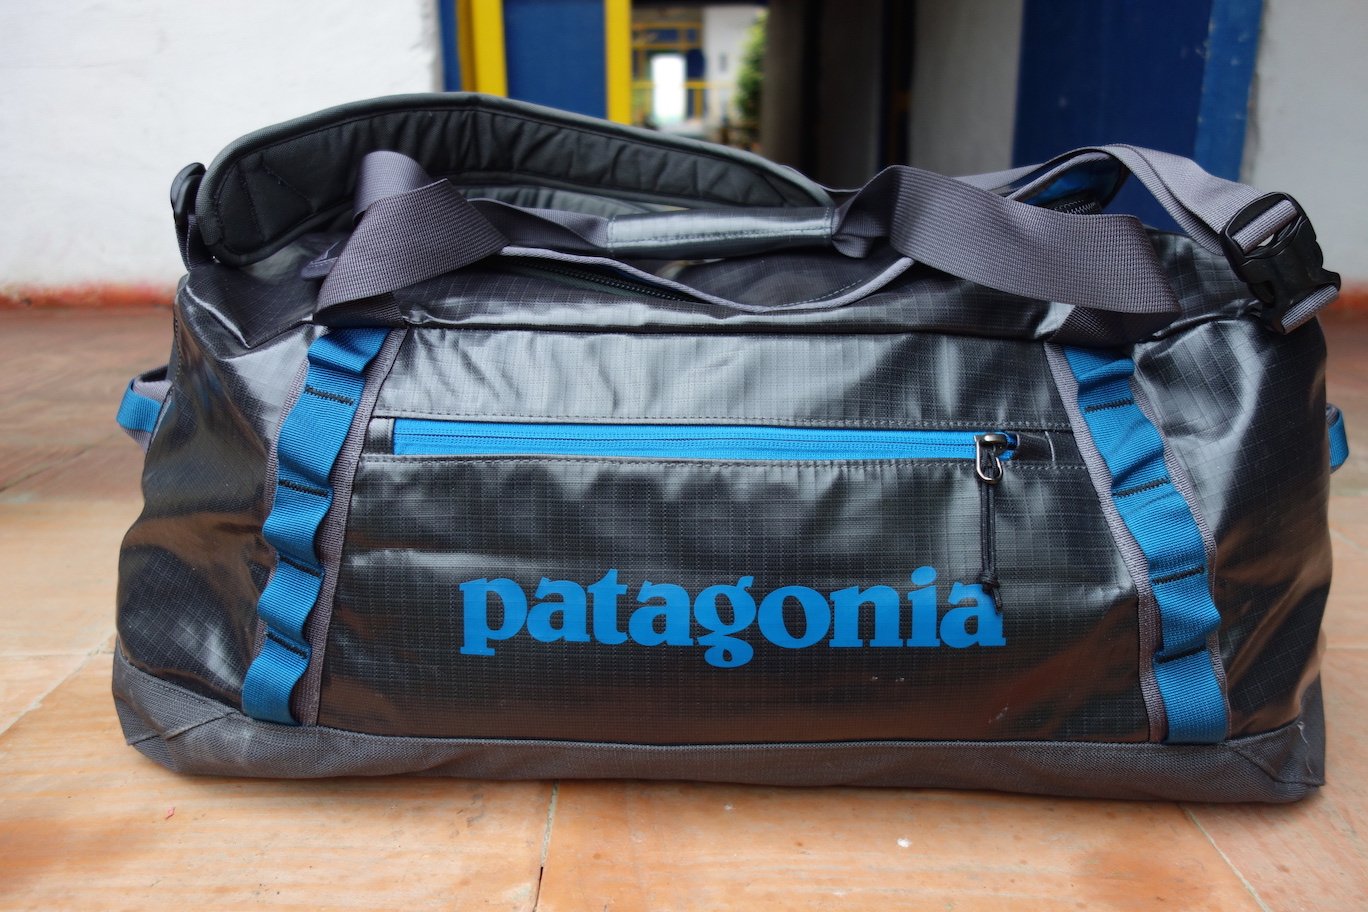 Testbericht Patagonia Black Hole Duffel Bag: robuster Reisebegleiter mit viel Stauraum (© airFreshing.com)